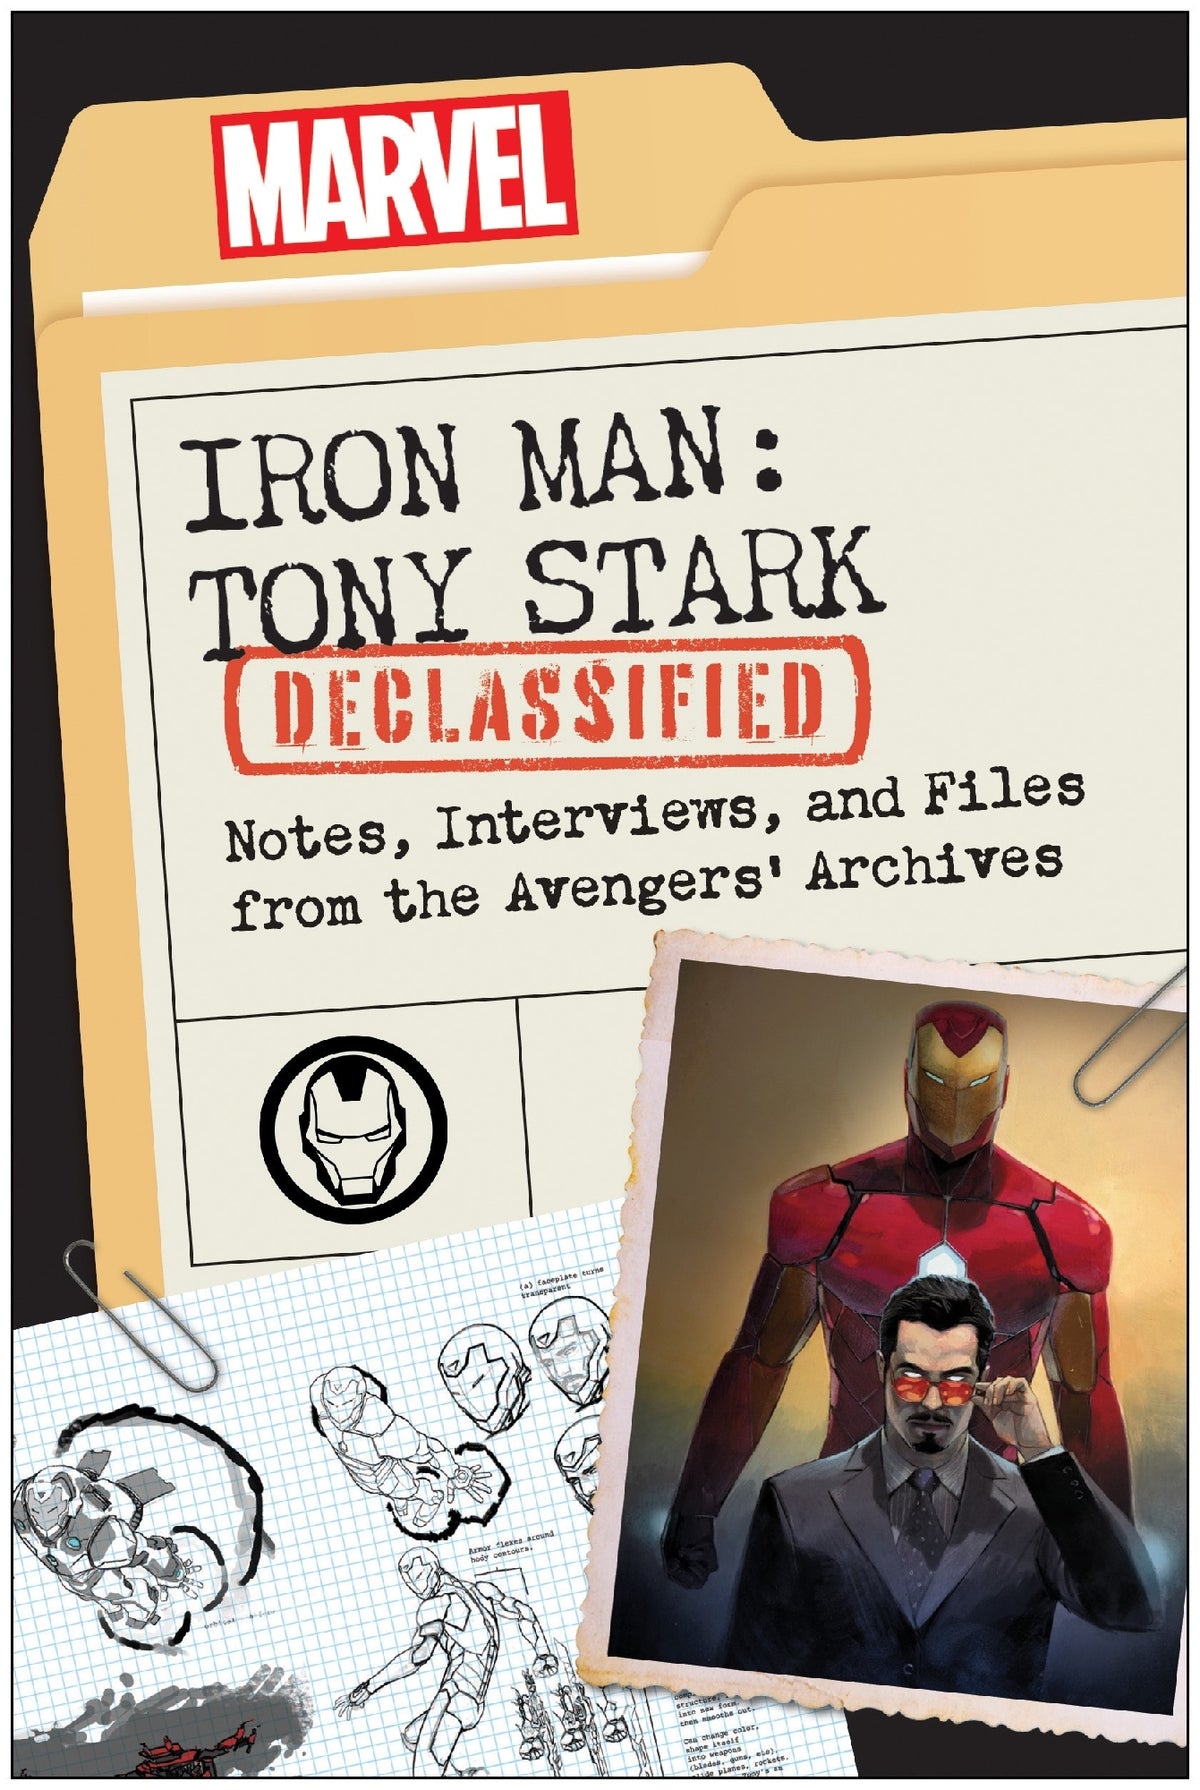 Iron Man Tony Stark Declassified